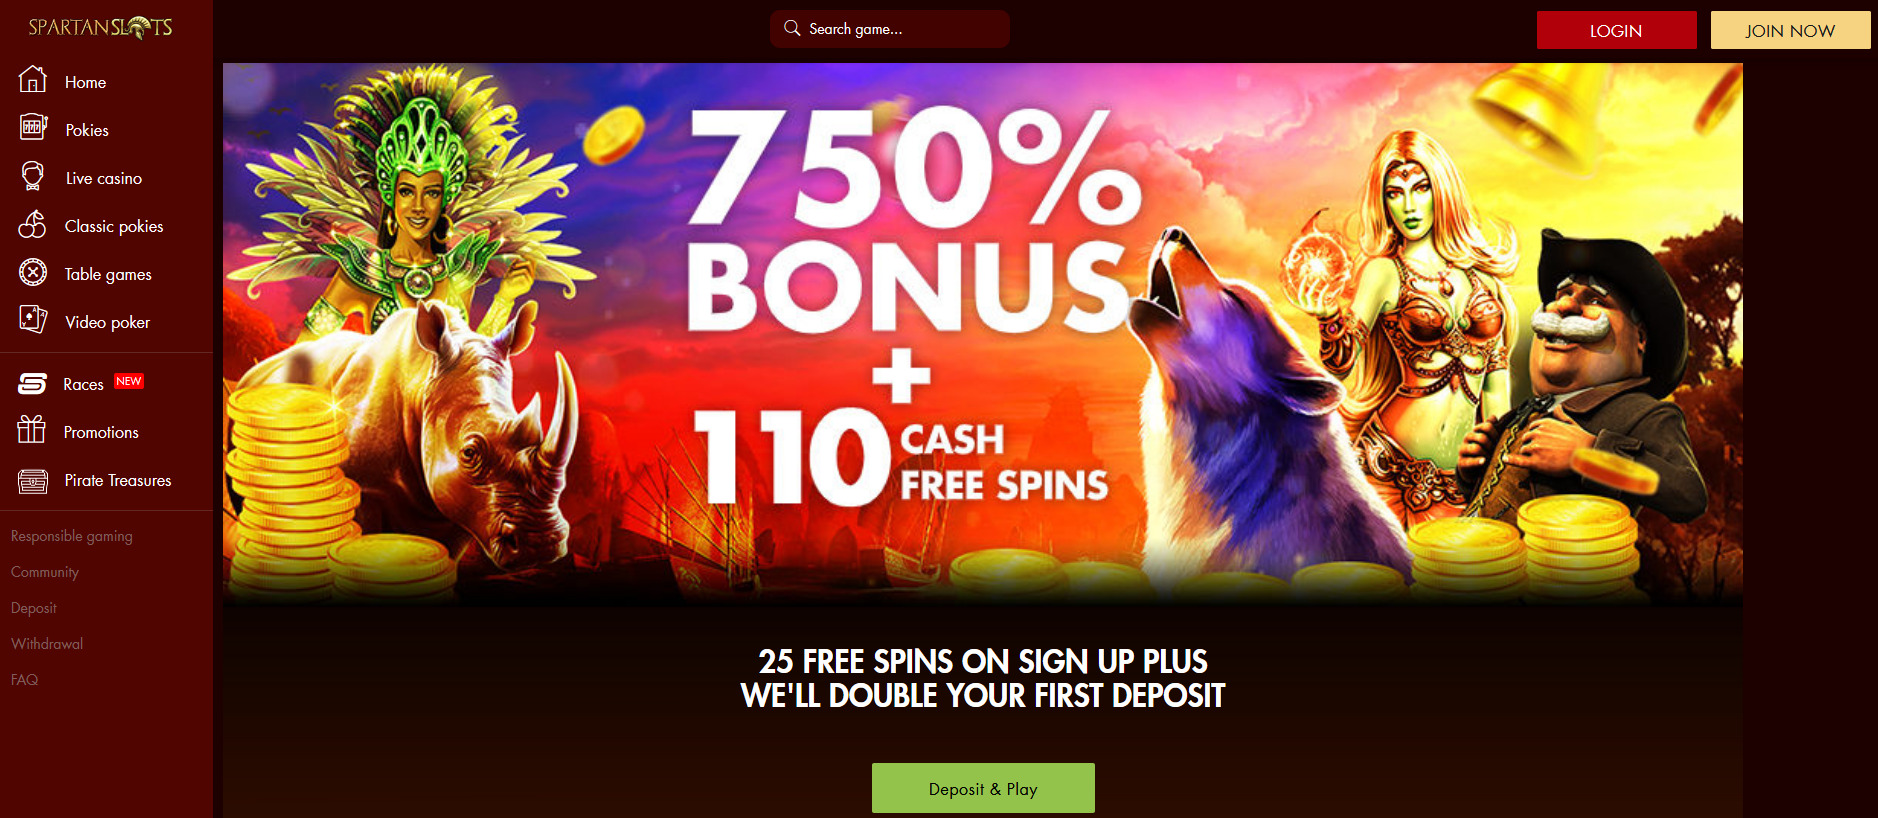 Spartan Slots-750% Bonus + 110 Cash Free Spins